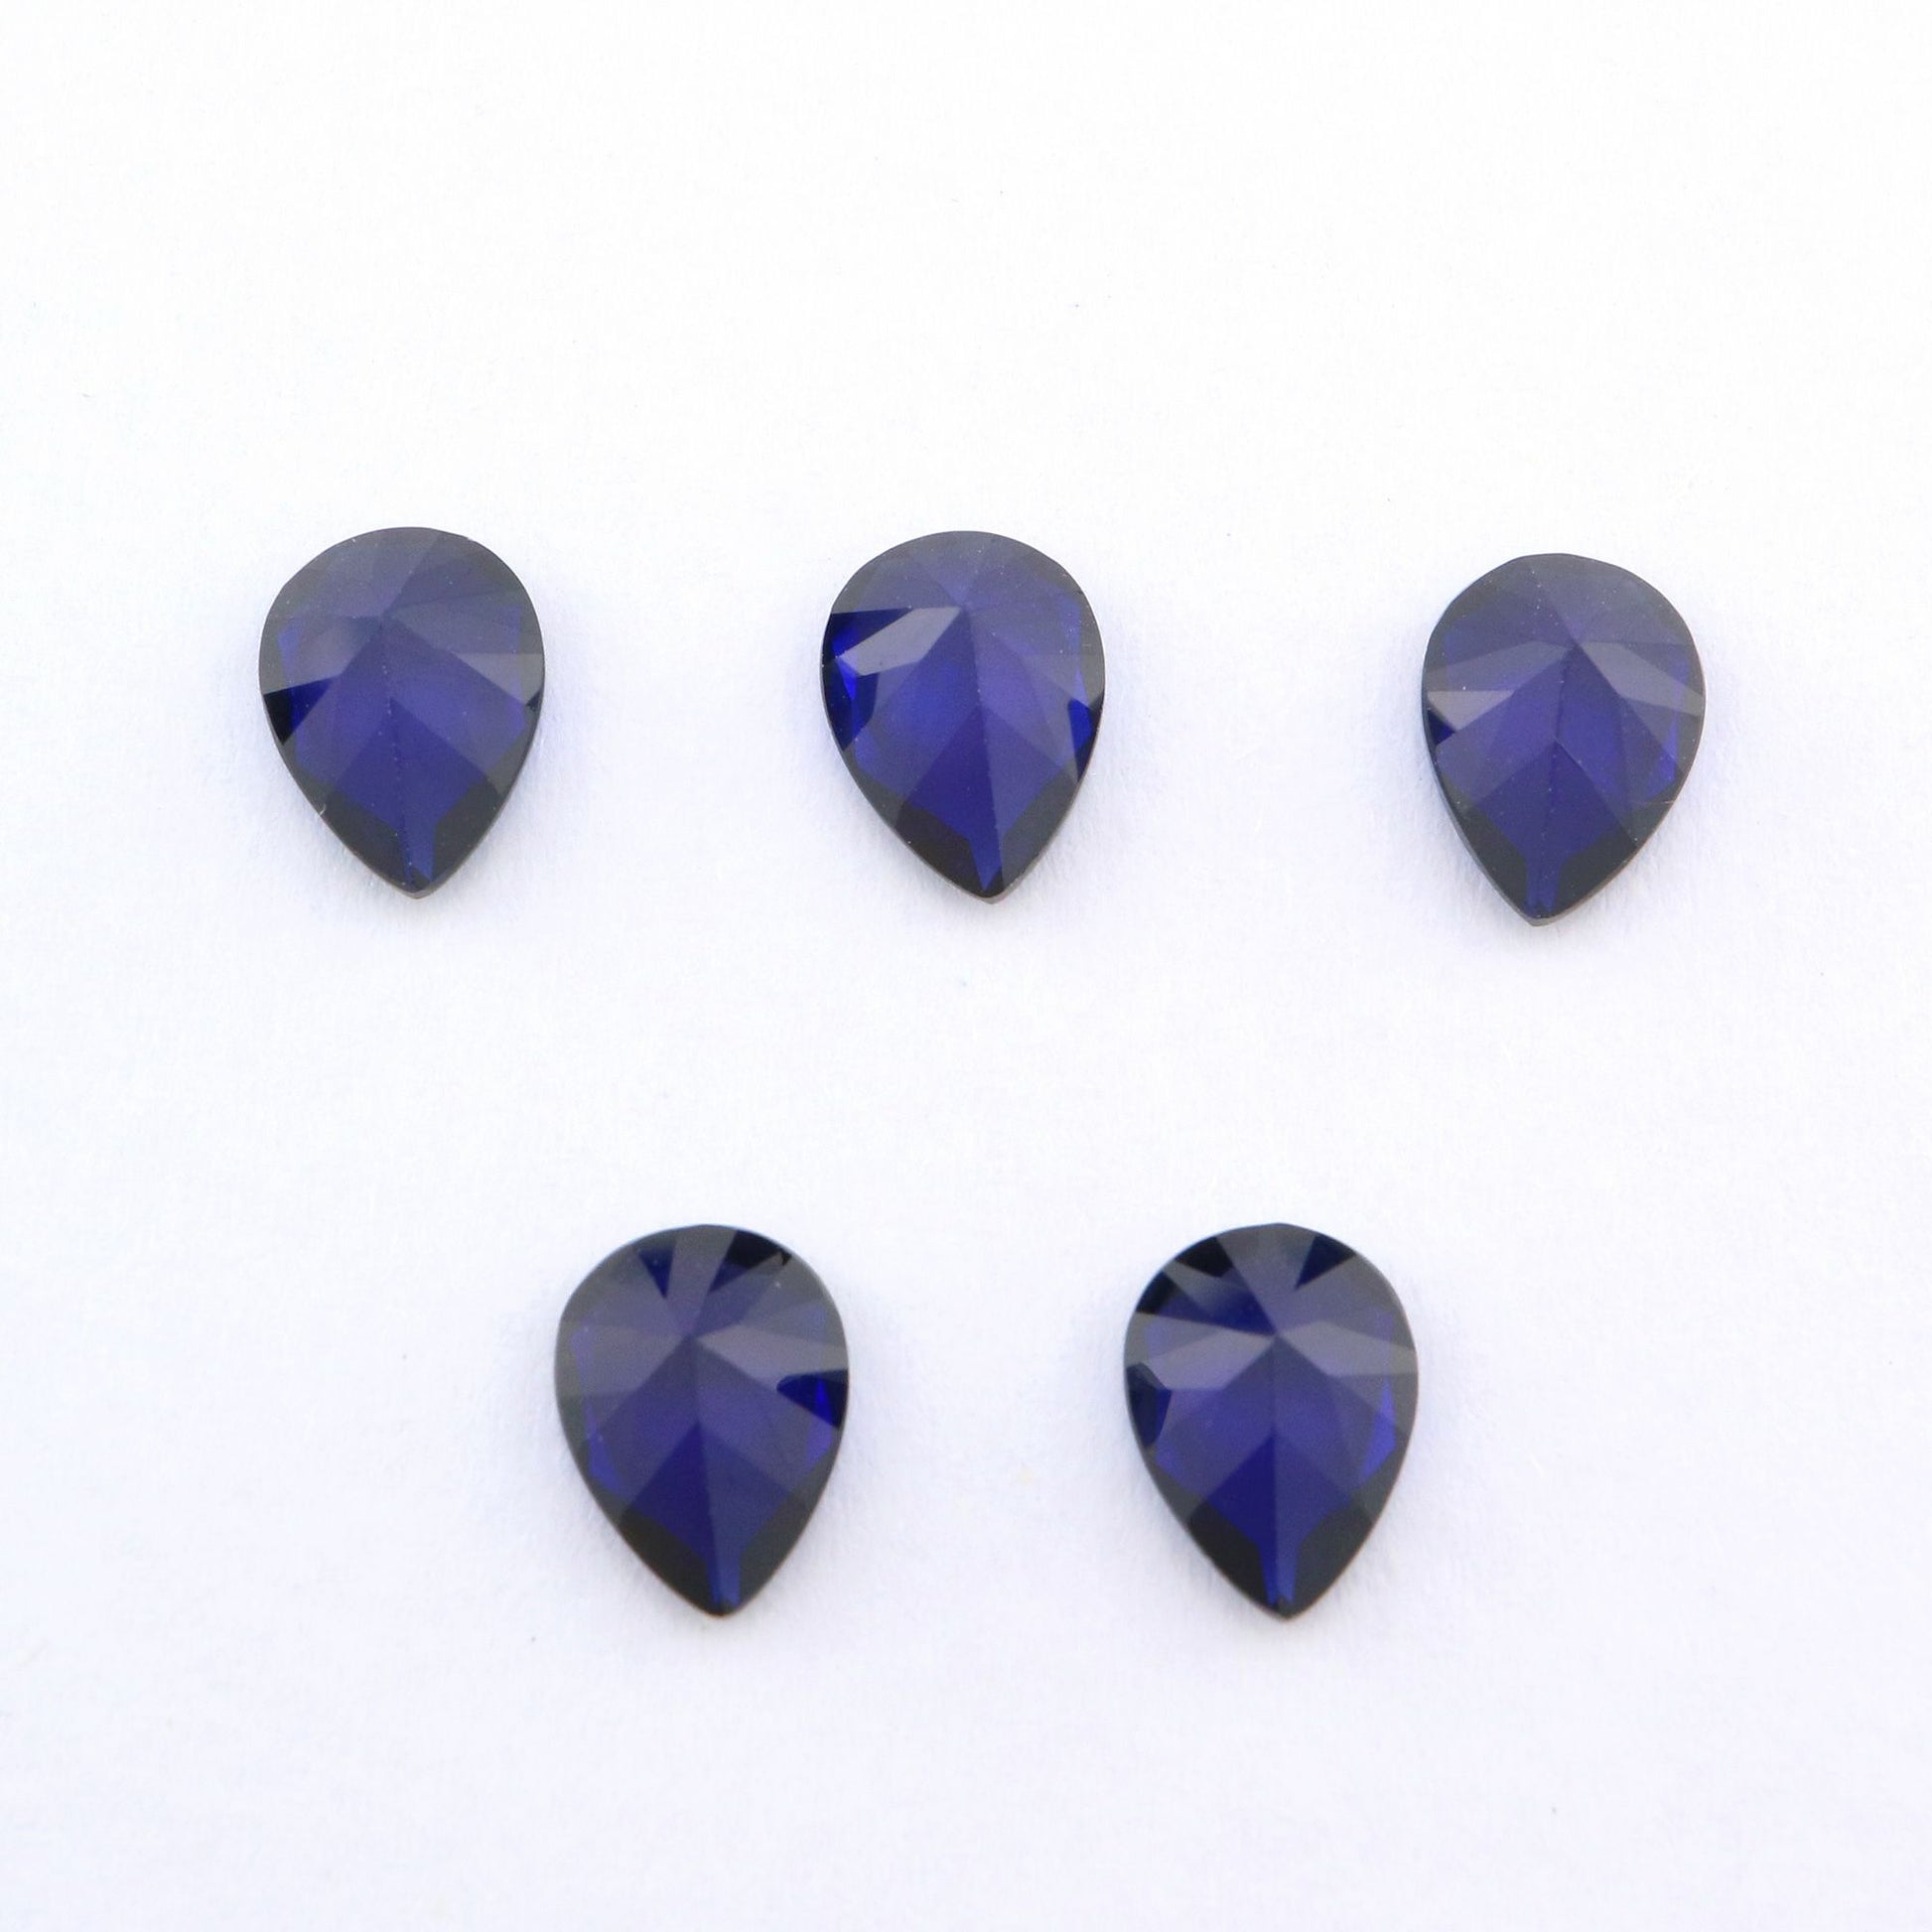 Five tear drop cut dark blue lab created sapphire.